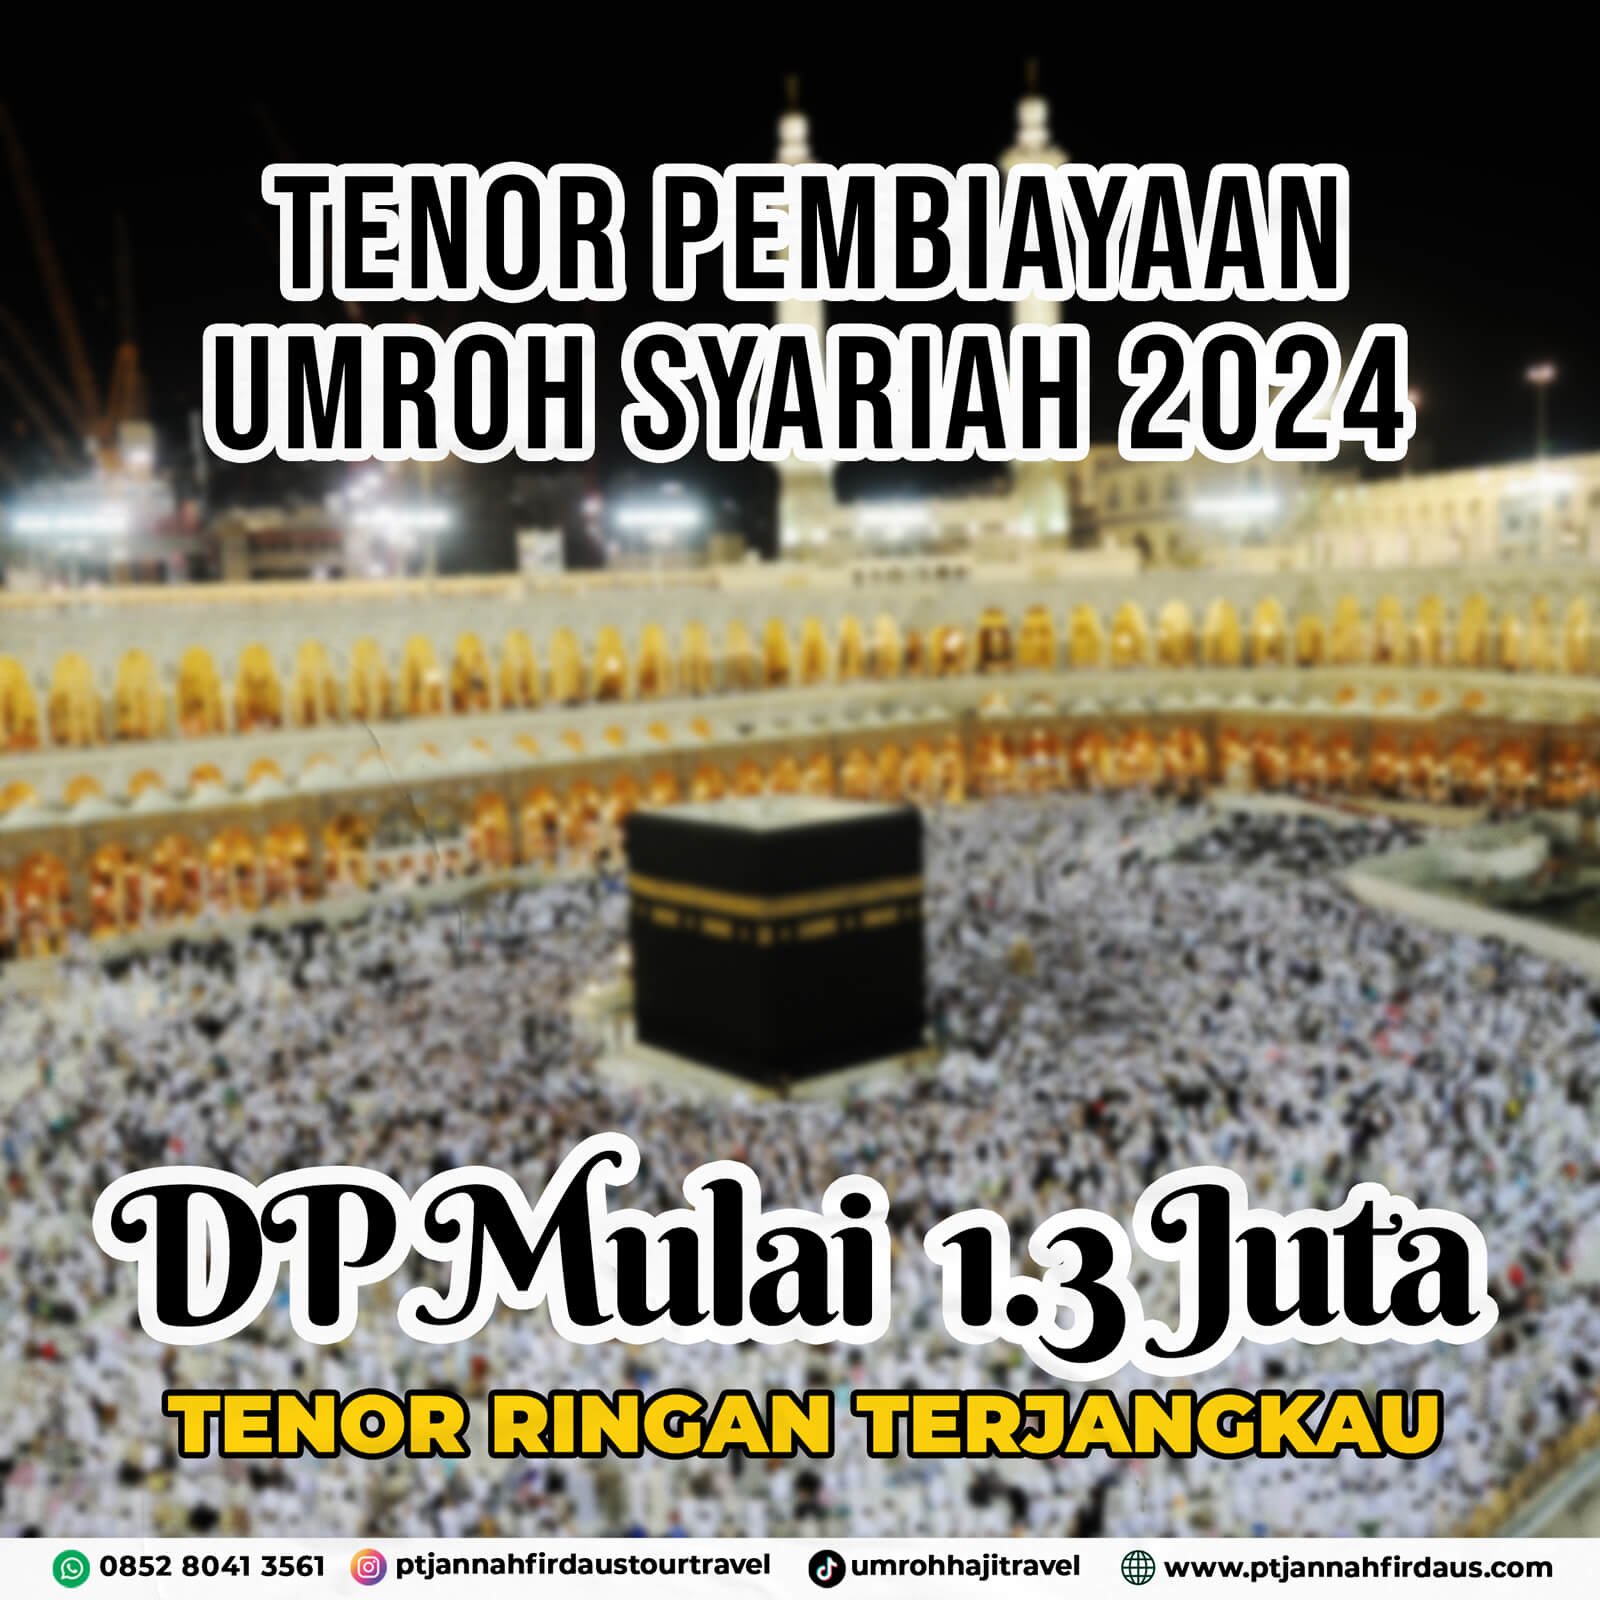 Tenor Pembiayaan Umroh Syariah 2024